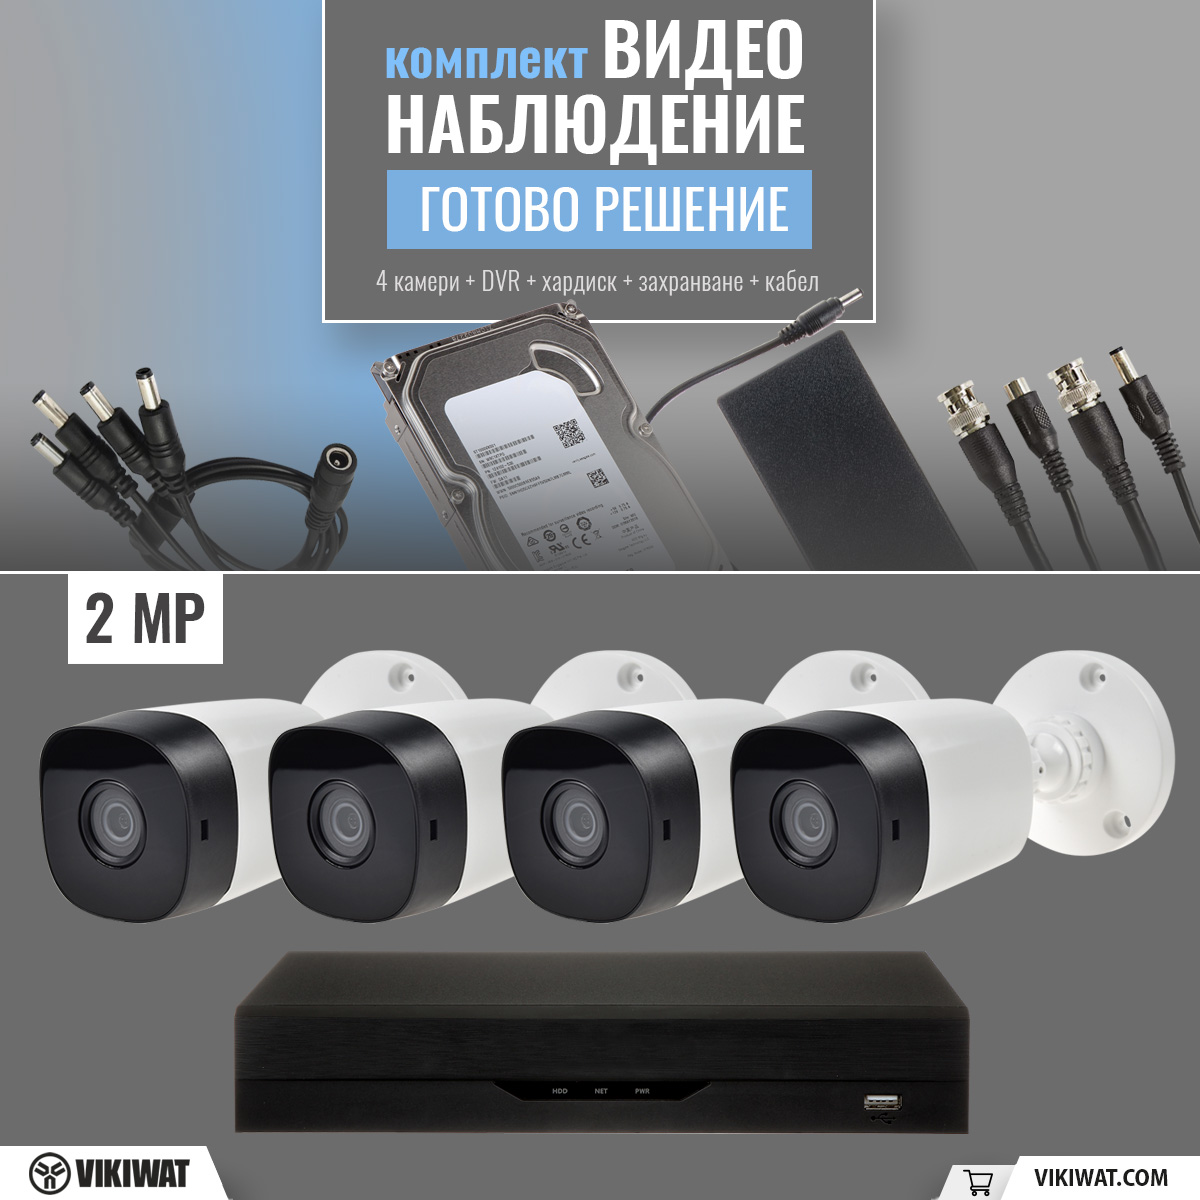 Комплект за видеонаблюдение 2Mp, 4бр. камери, DVR и аксесоари Готово решение